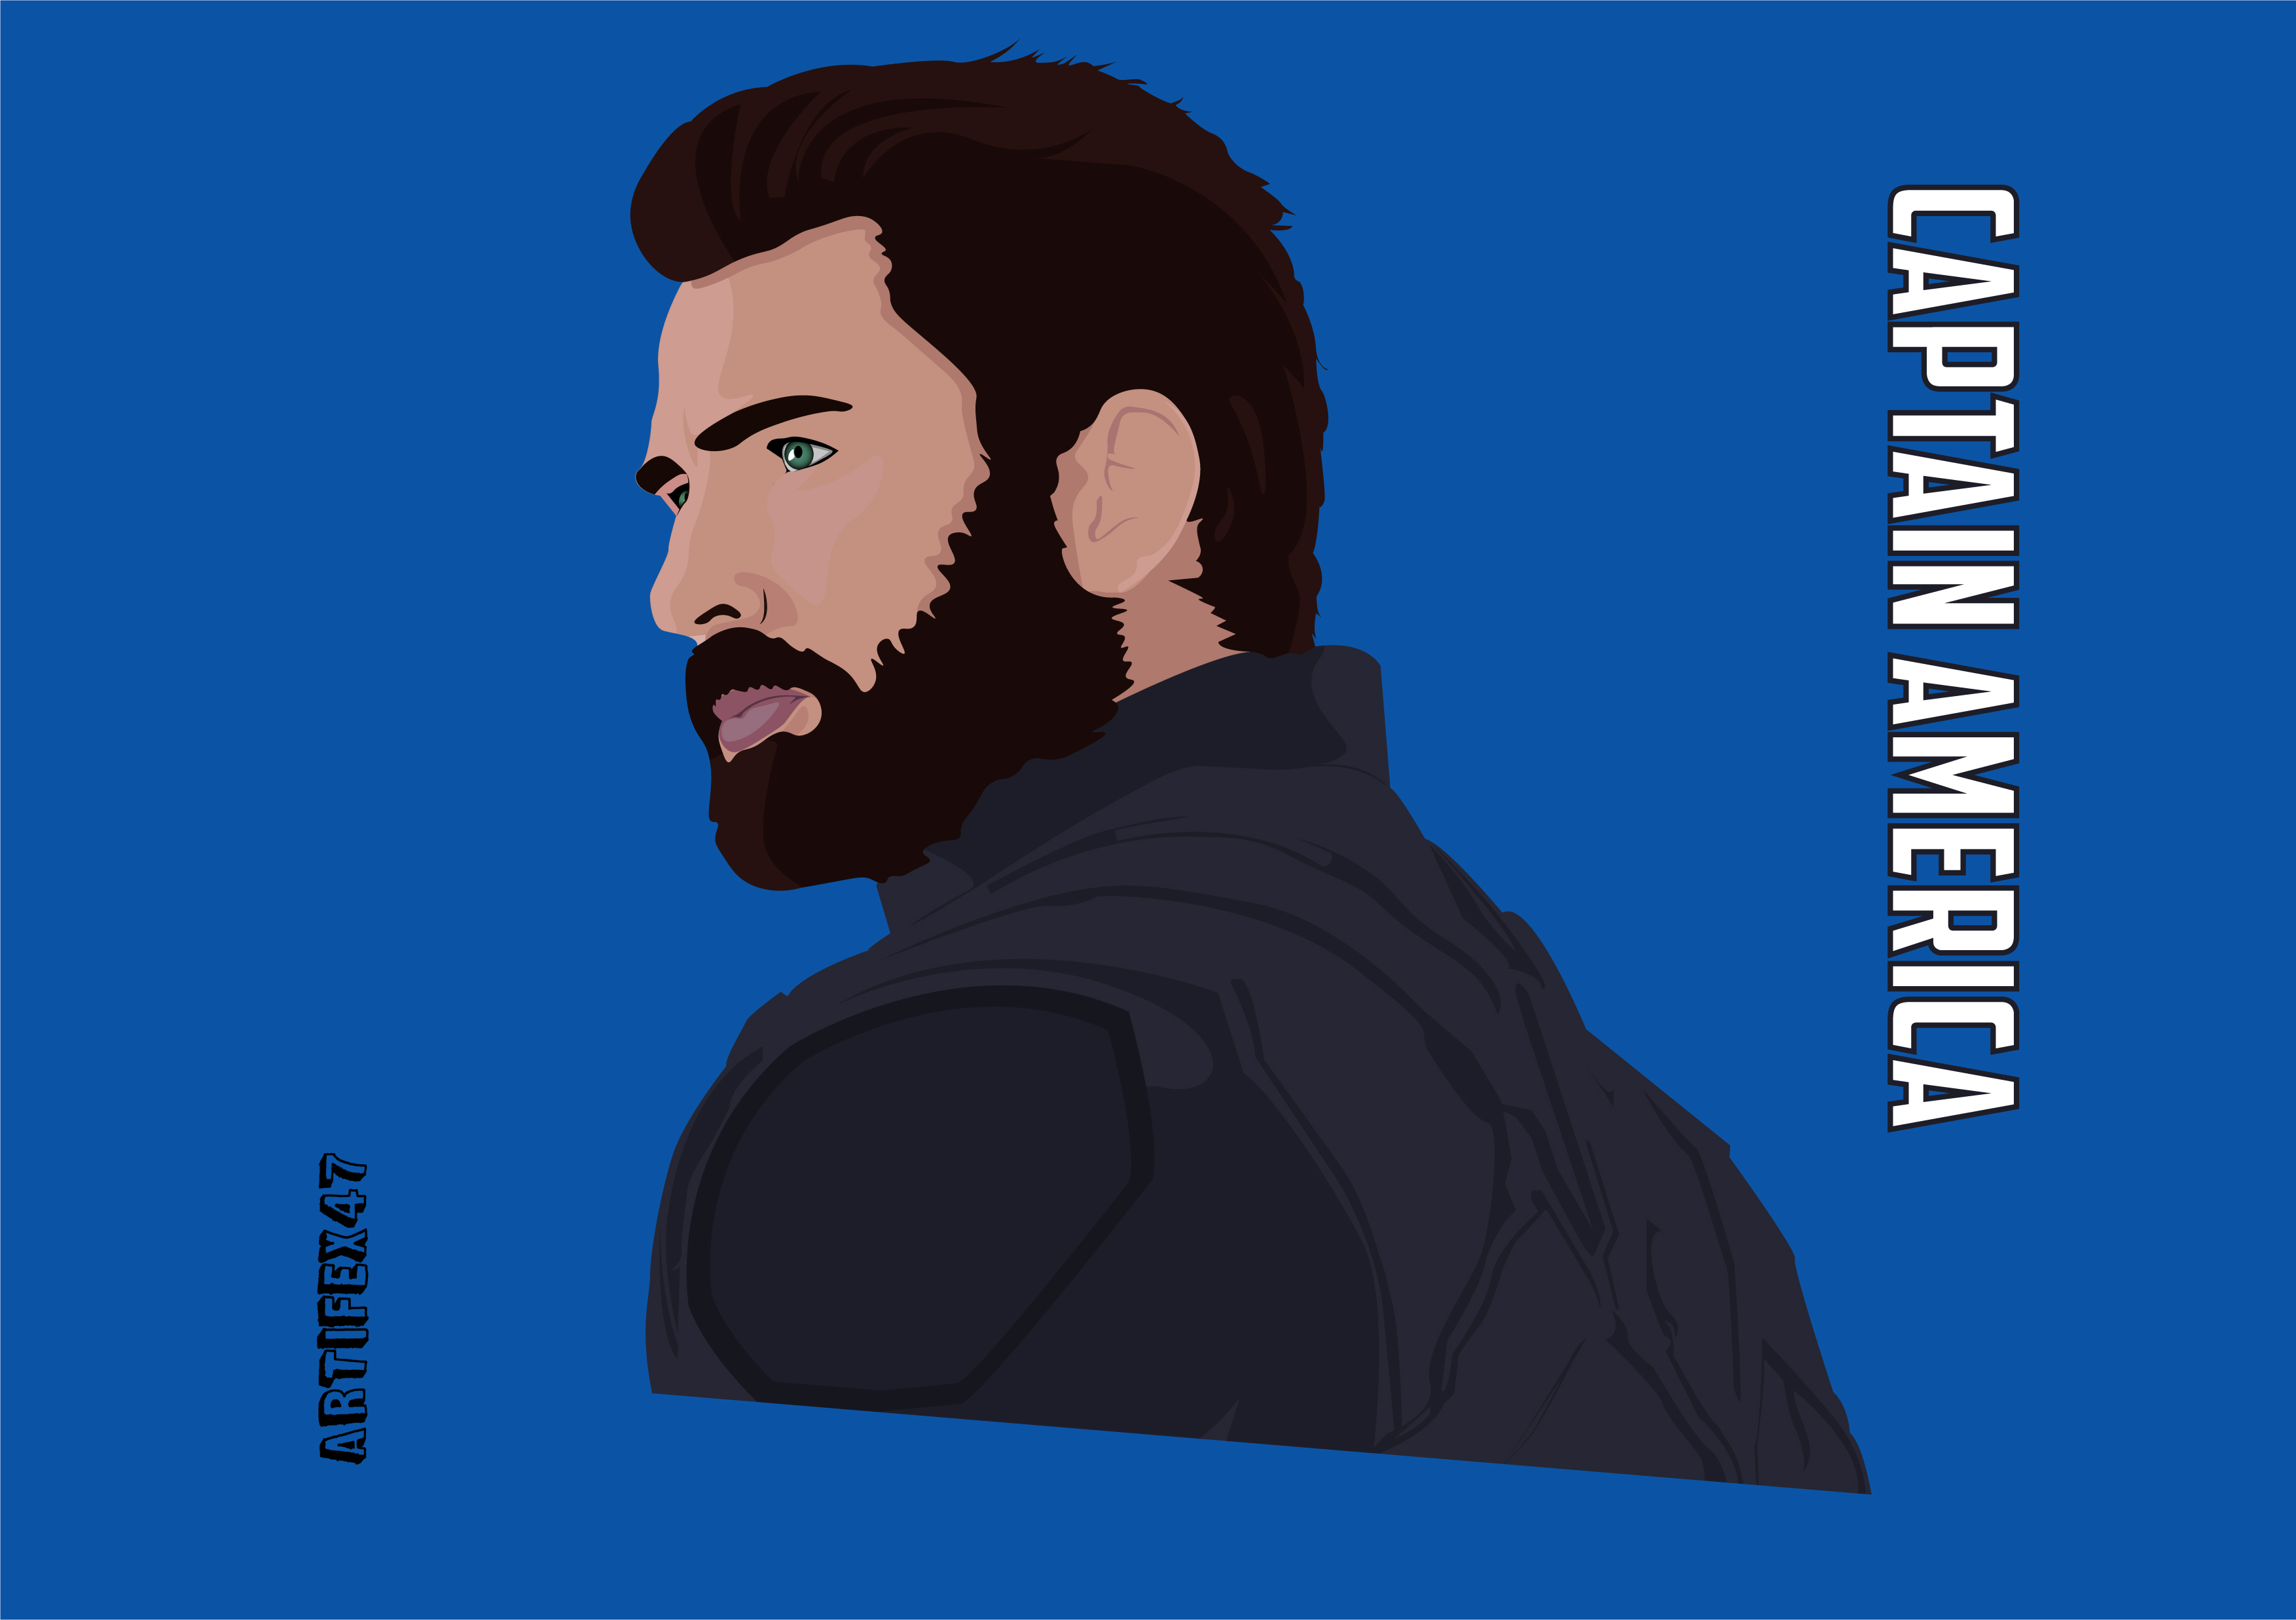 Captain America Digital Art by ayushp_0312